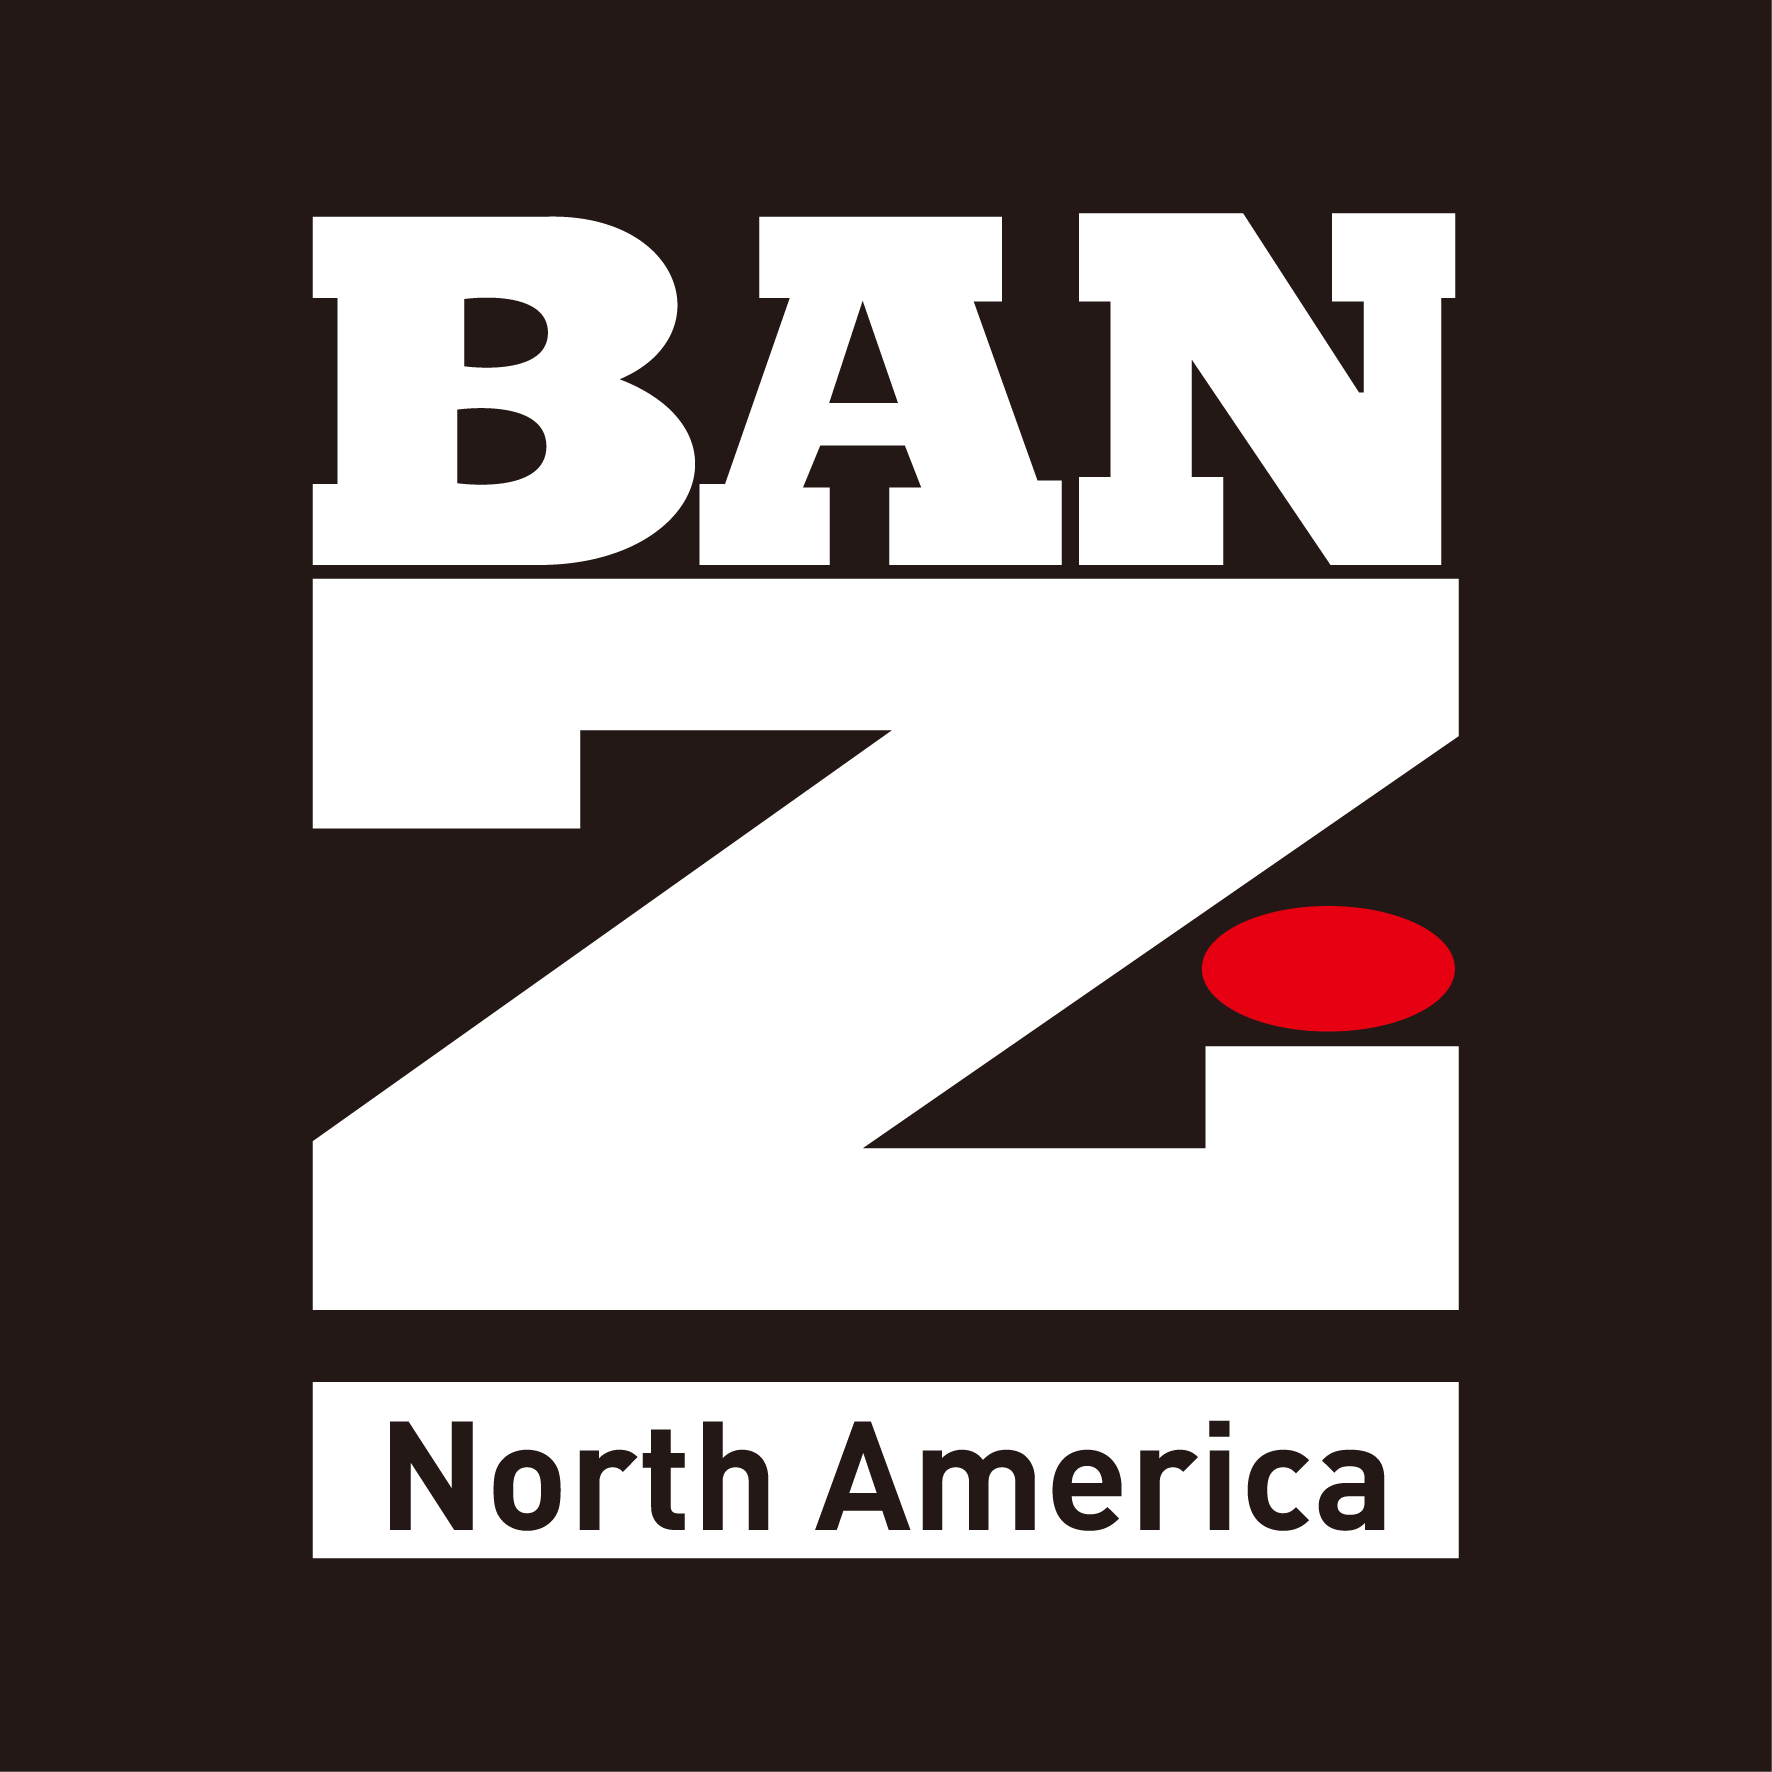 BANZINORTHAMERICA Logo